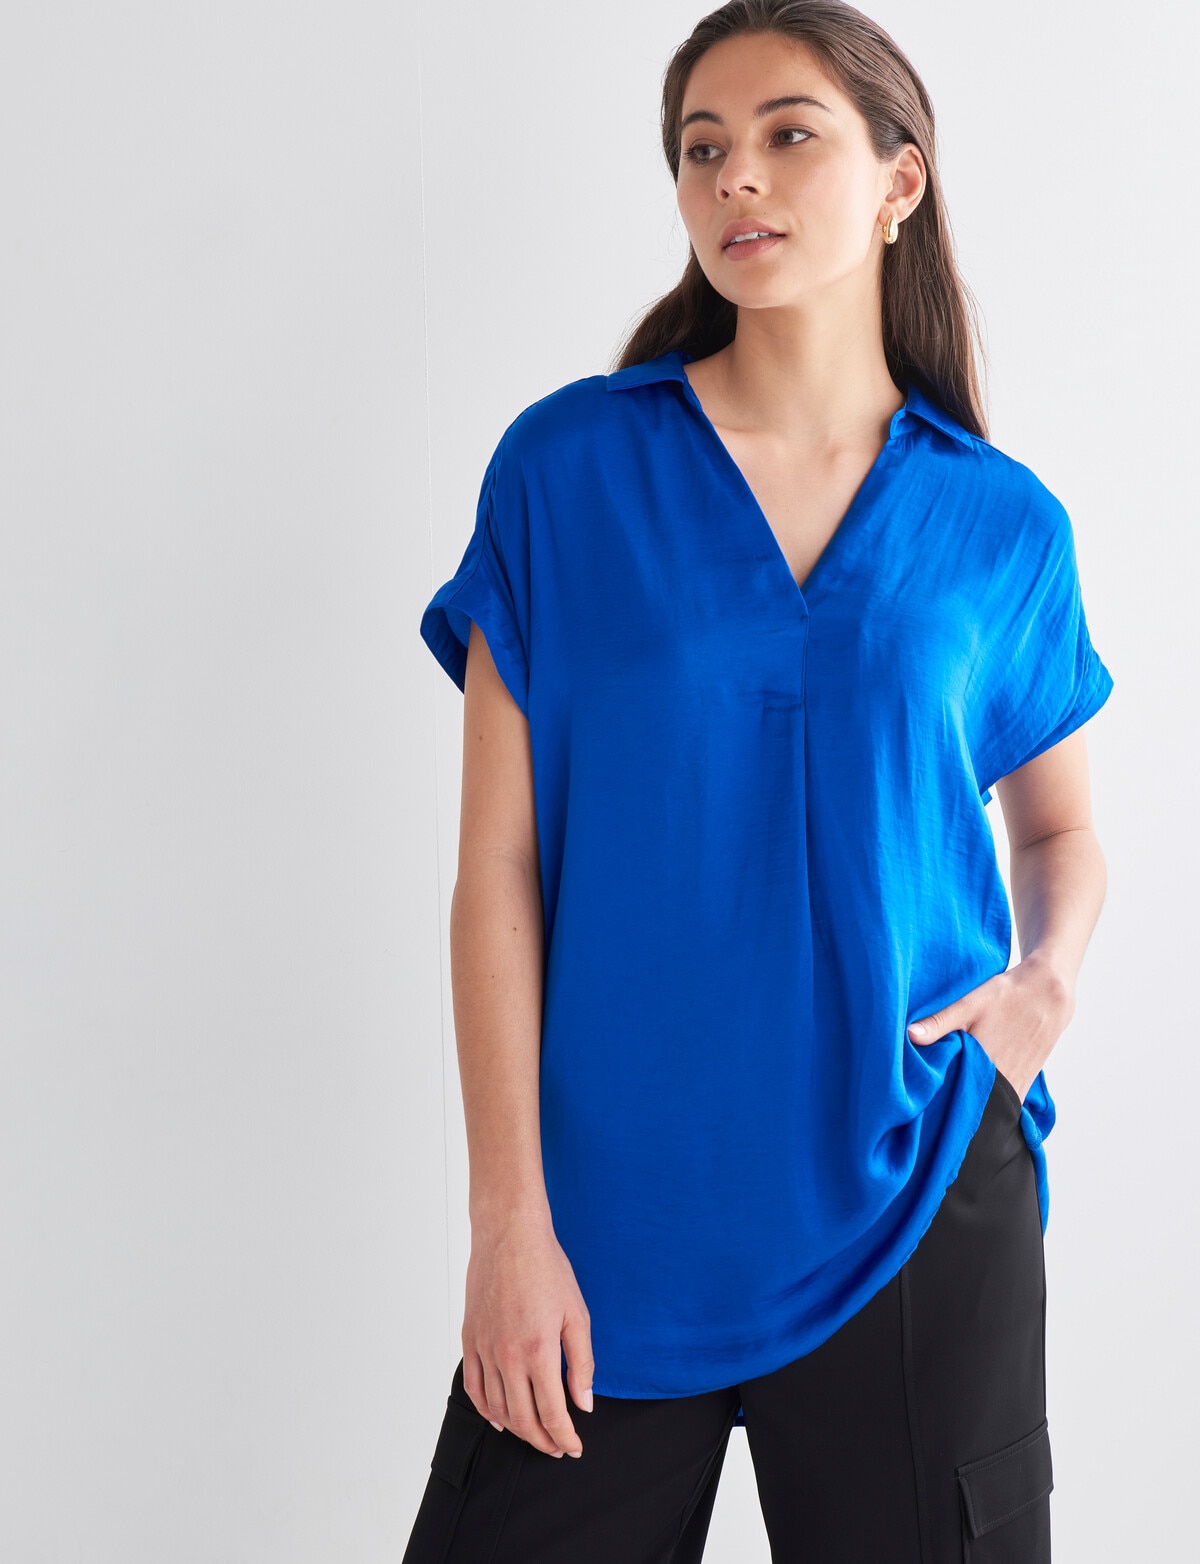 Whistle Short Sleeve Shirt, Bright Blue - Tops